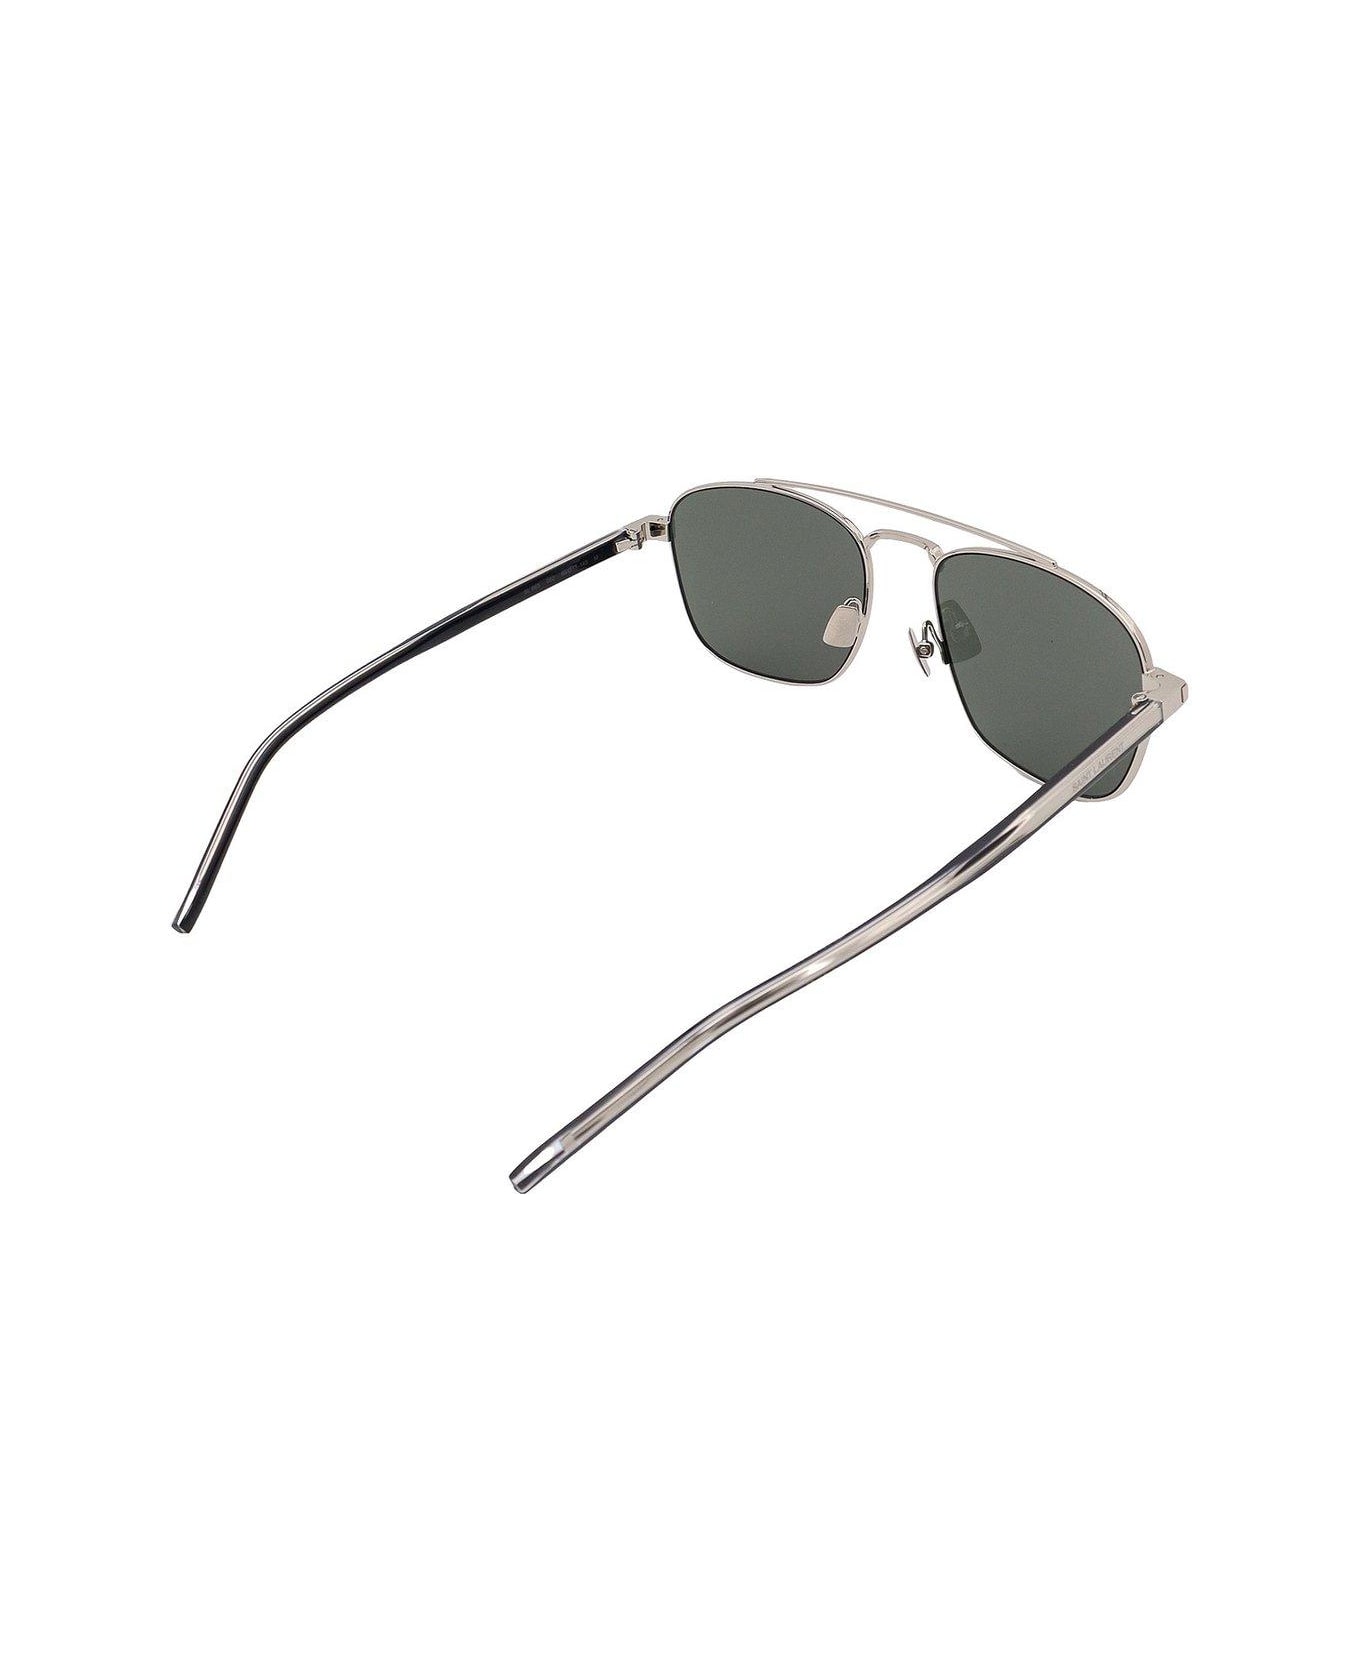 Saint Laurent Aviator Sunglasses - Argento サングラス